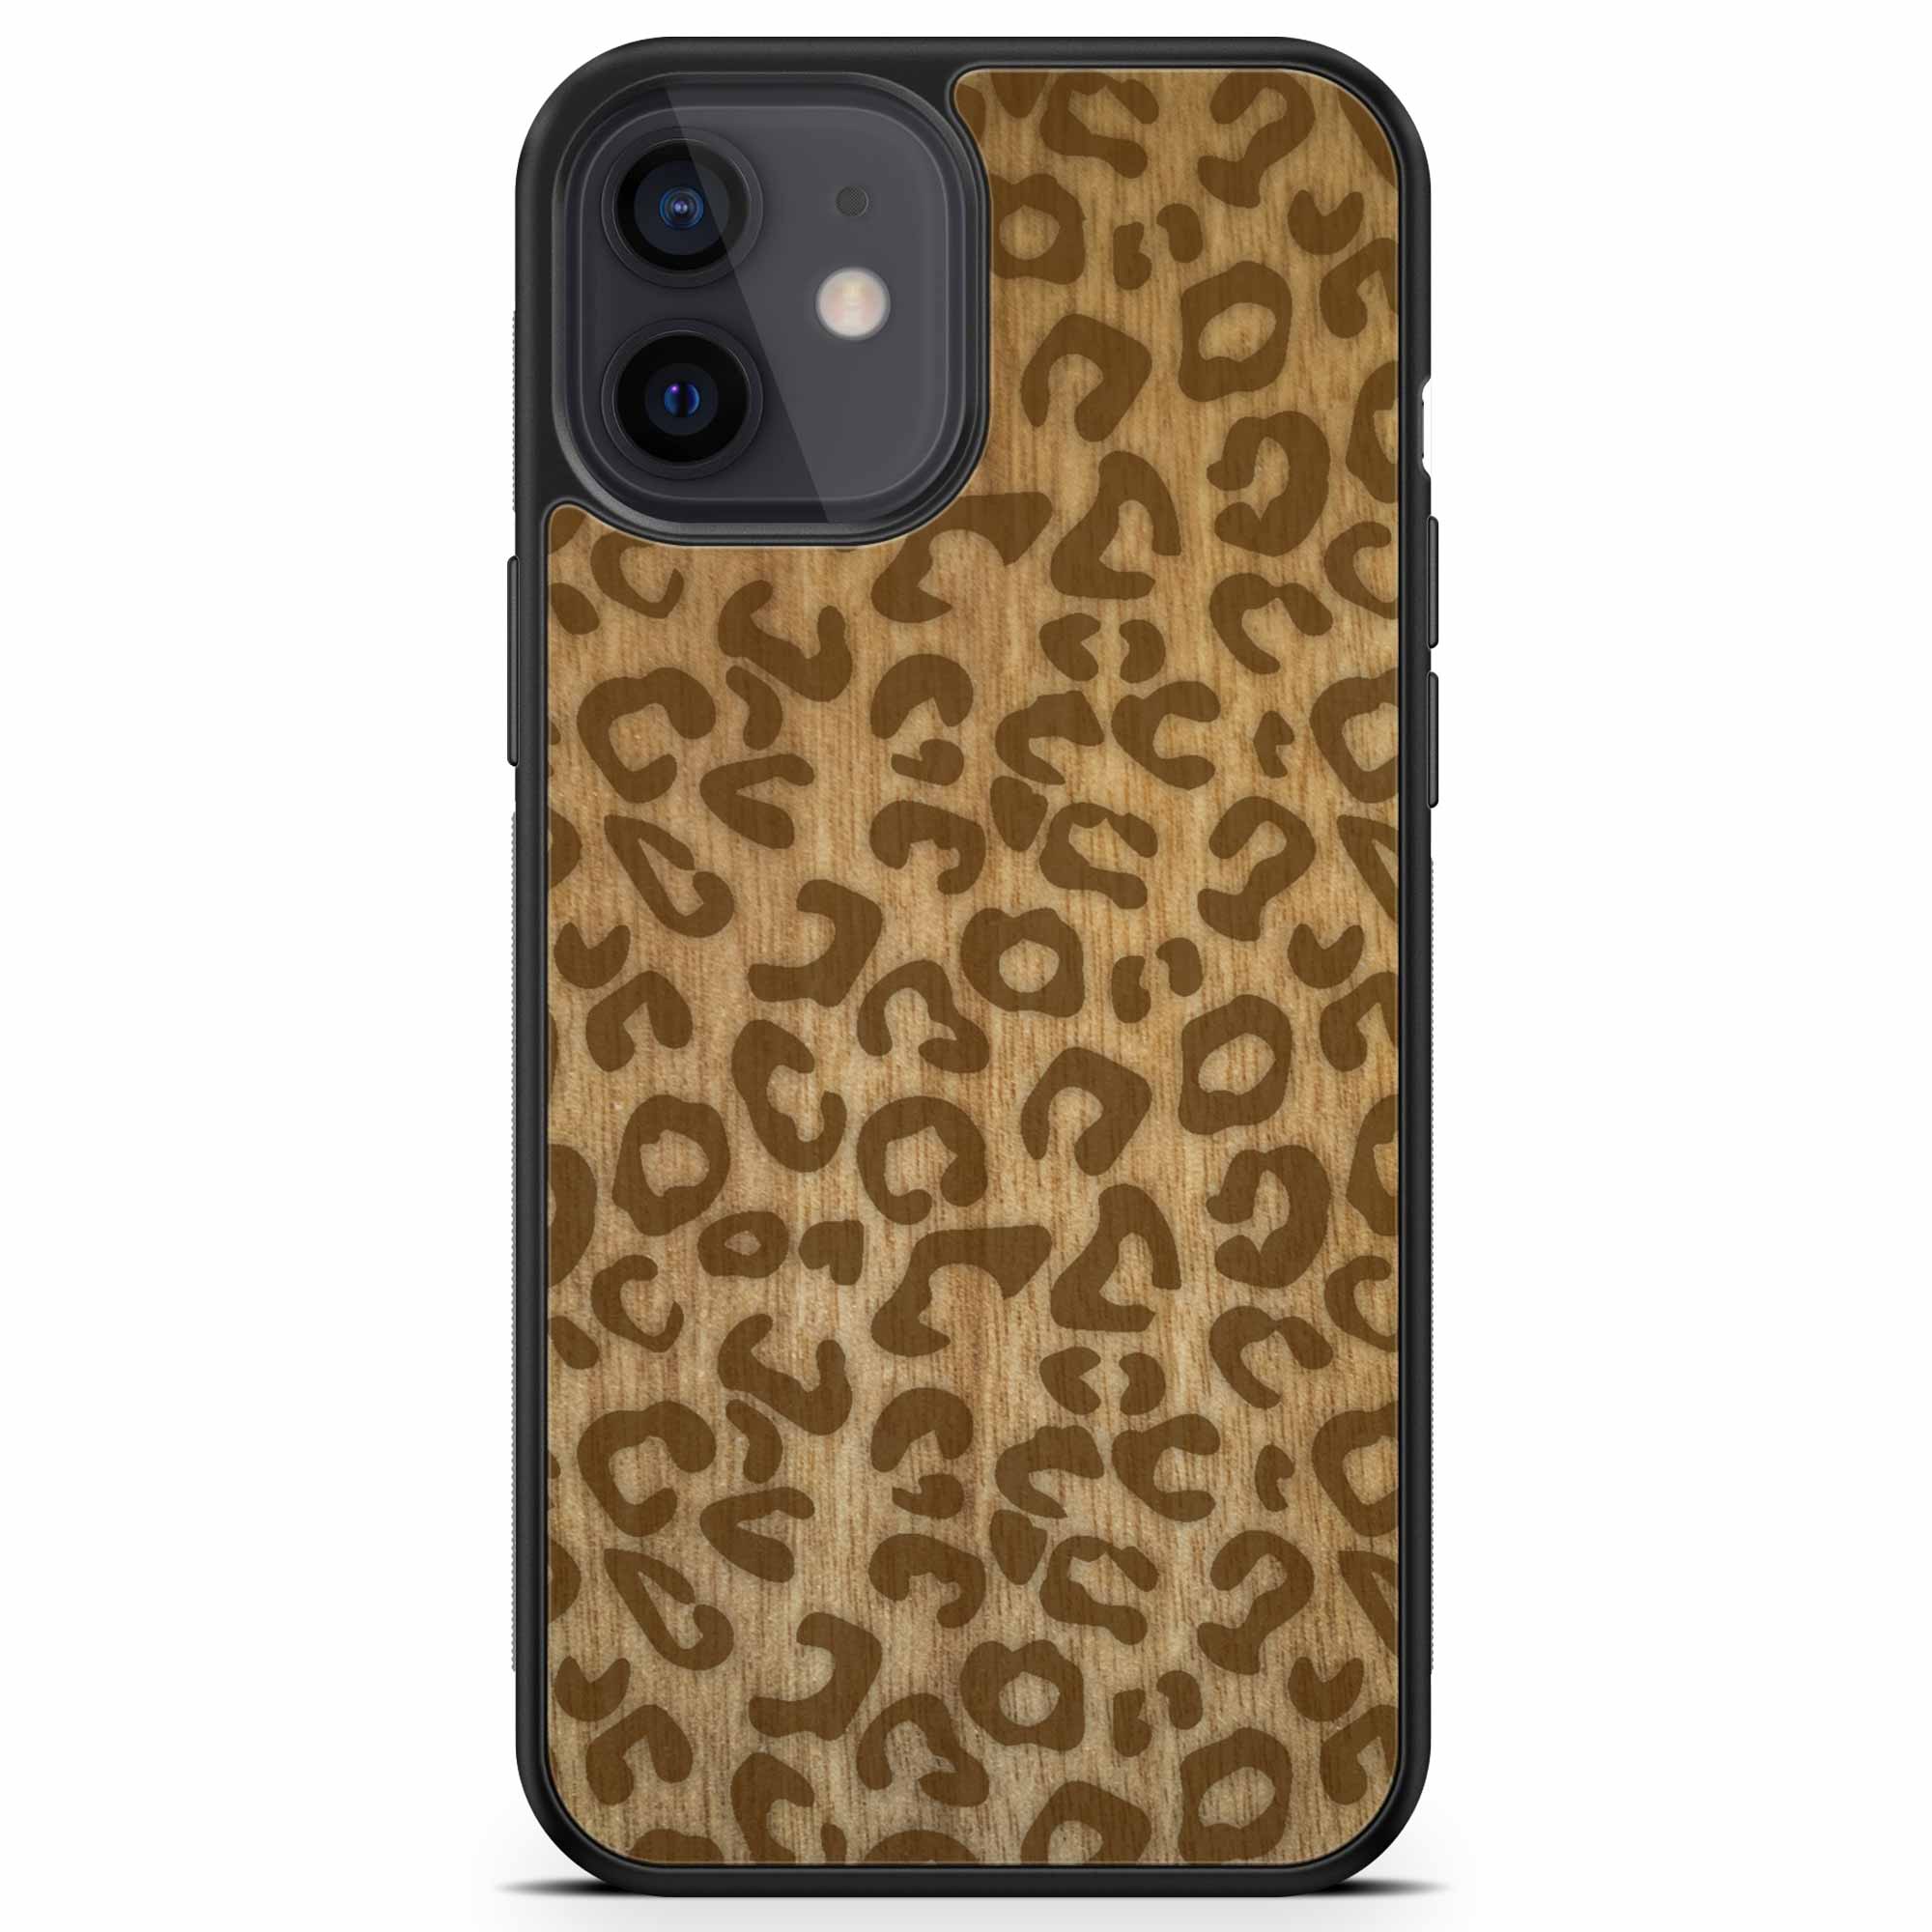 iPhone 12 Mini-Holz-Handyhülle mit Cheetah-Print